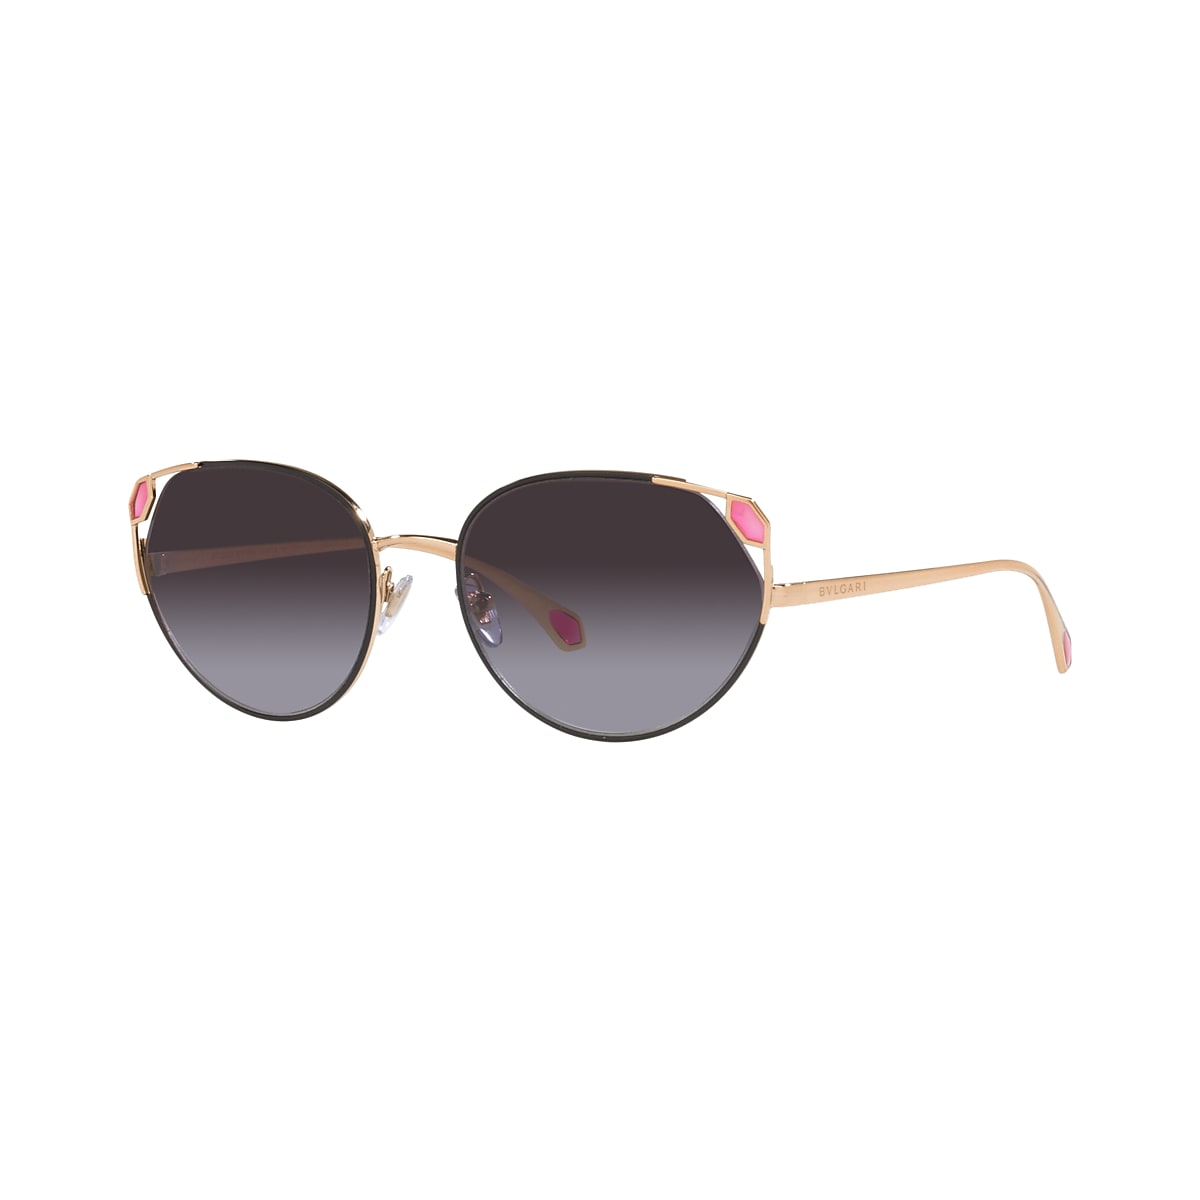 BVLGARI BV6177 Pink Gold/Black - Woman Luxury Sunglasses, Grey Gradient Lens